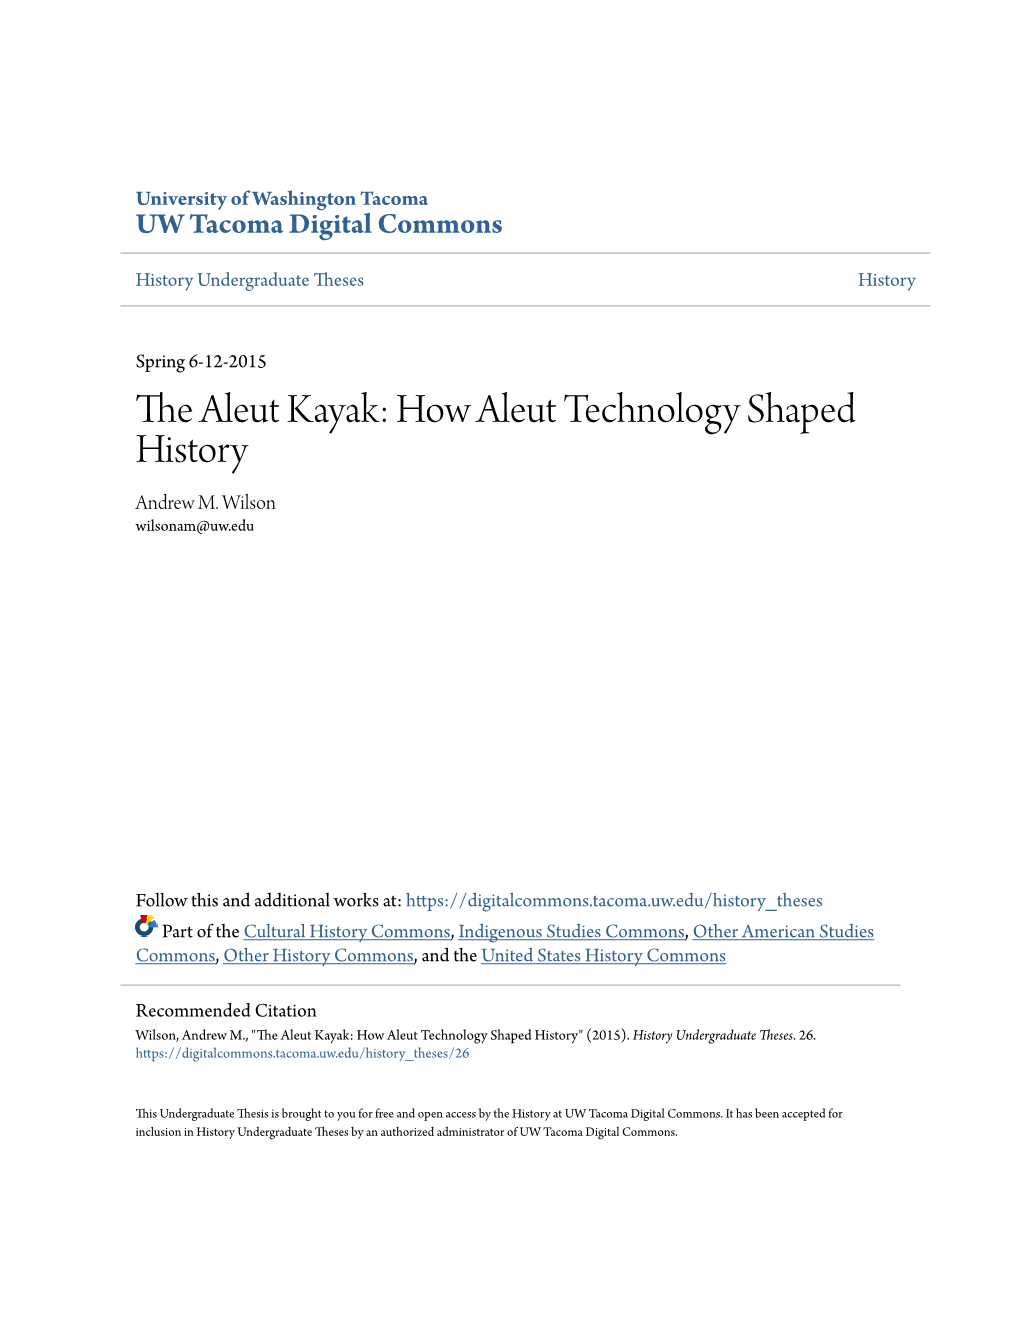 The Aleut Kayak: How Aleut Technology Shaped History Andrew M